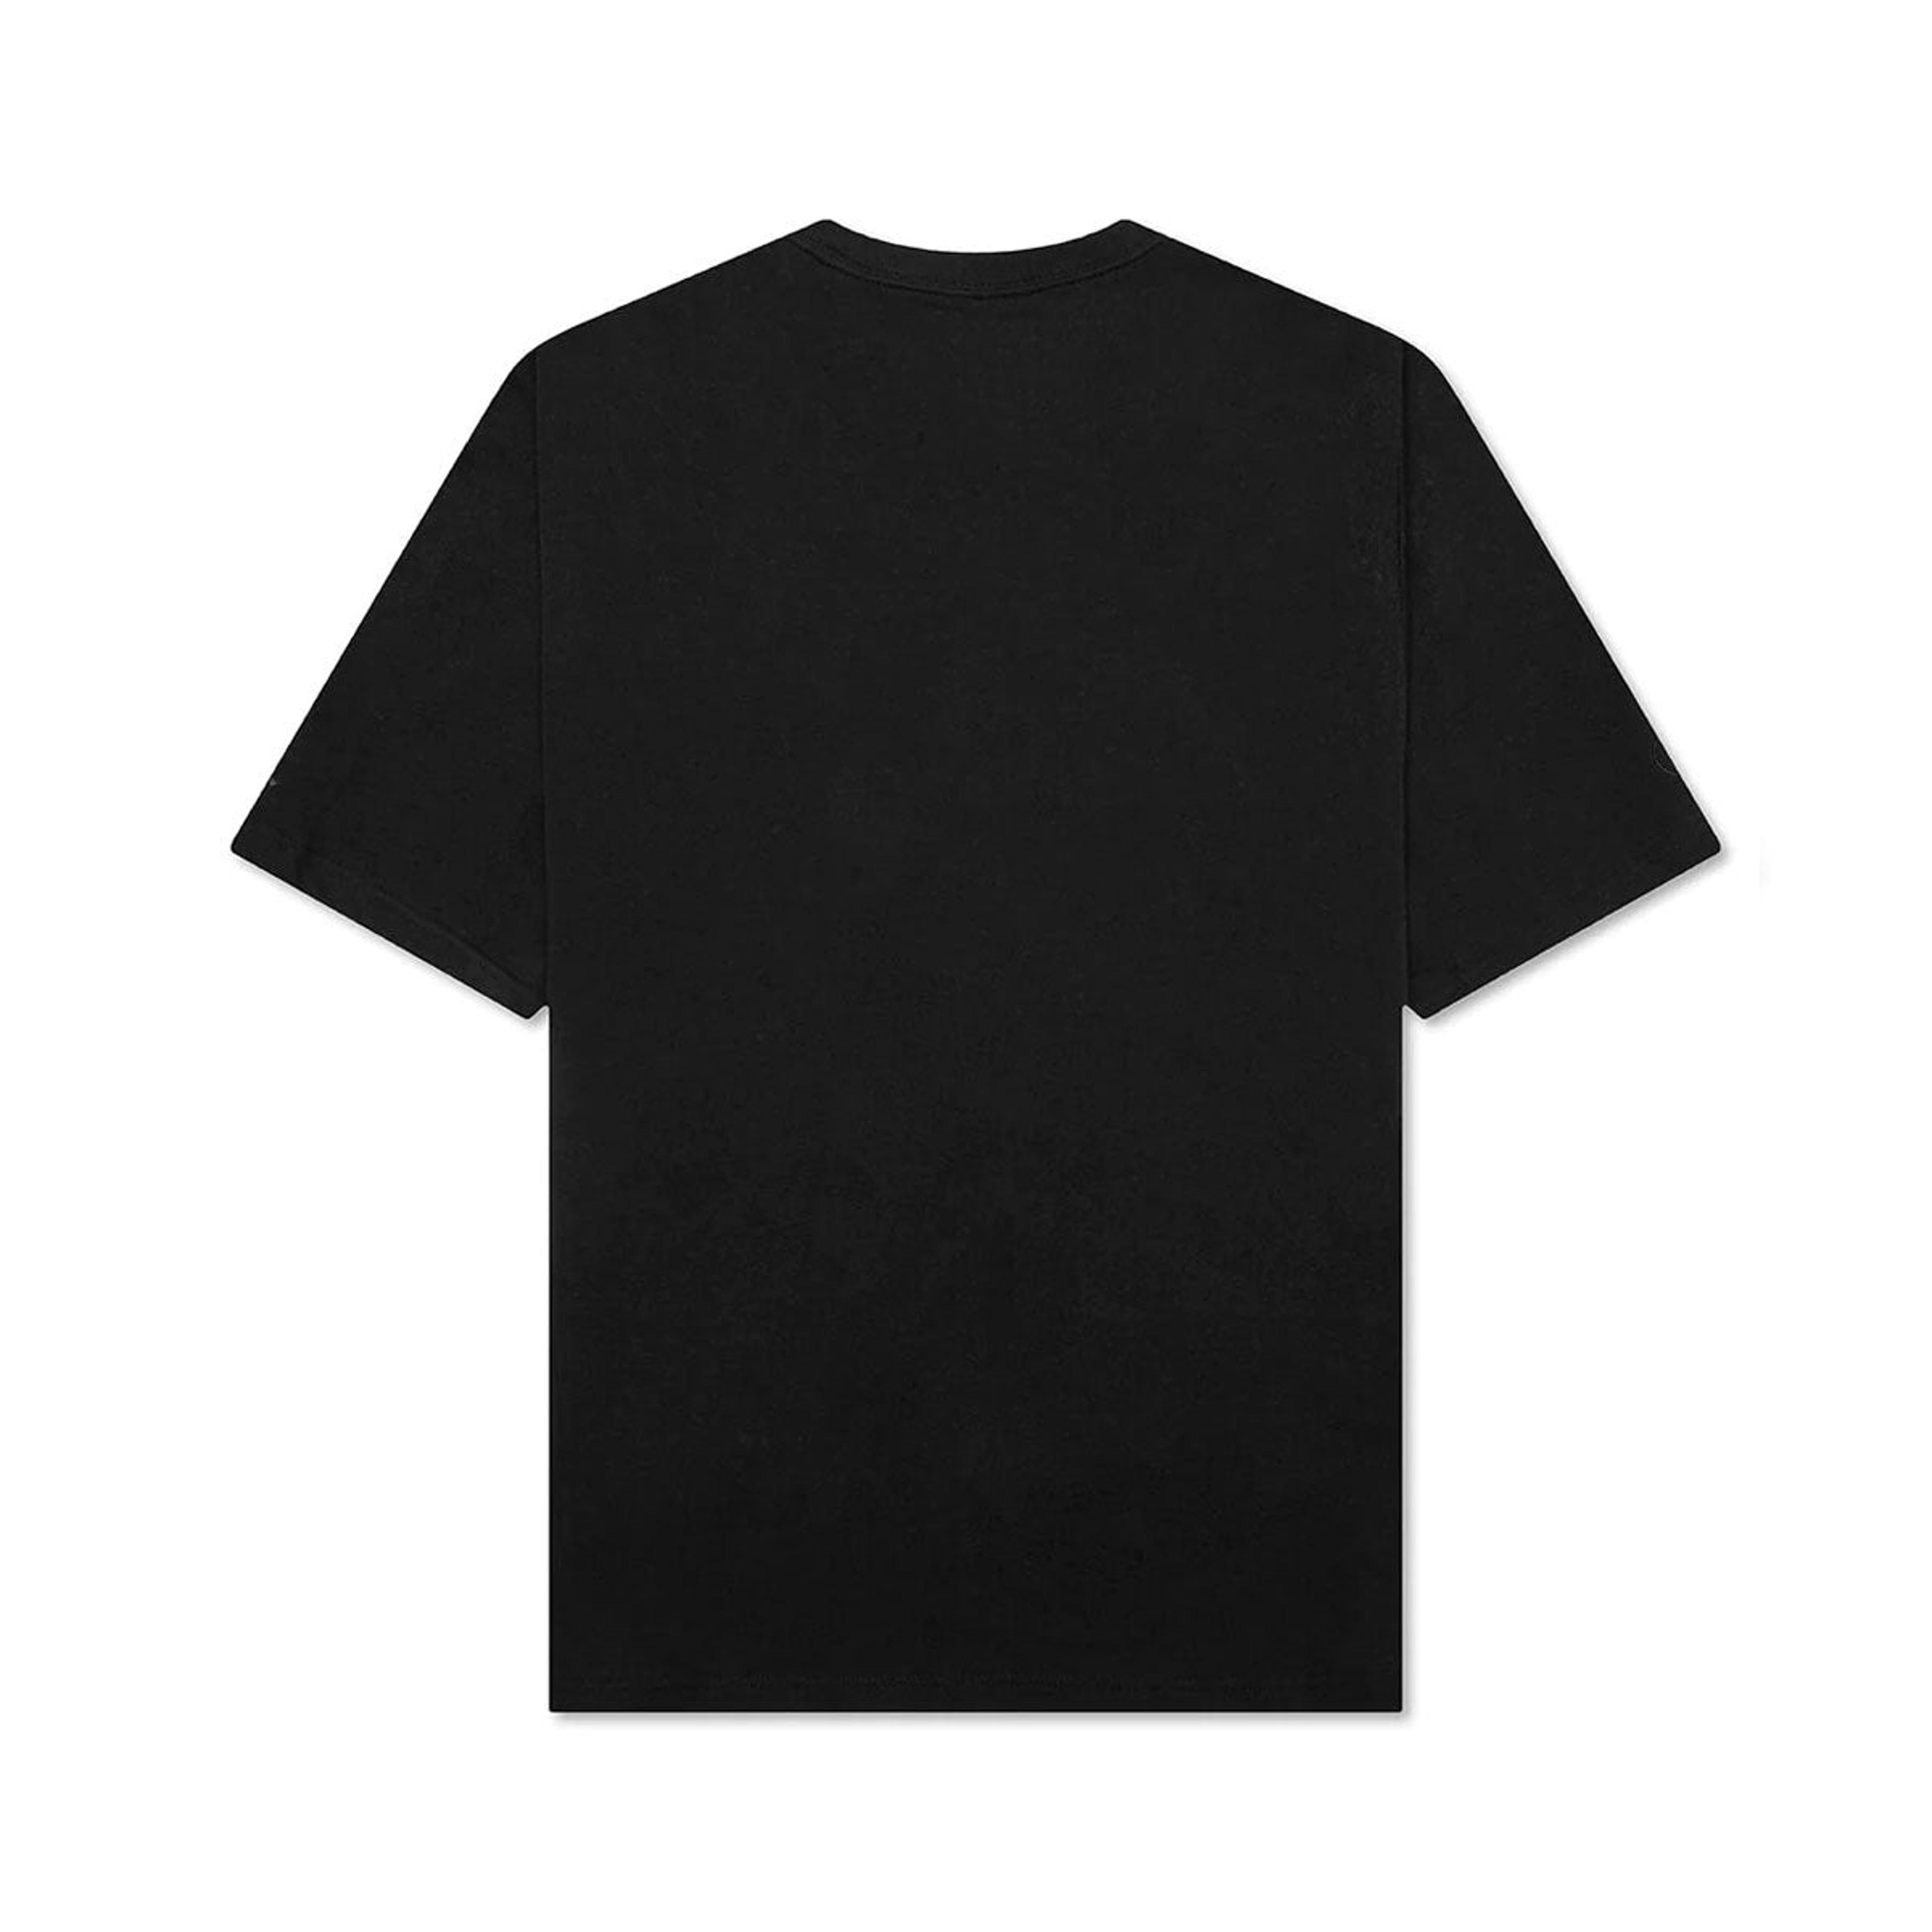 Alternate View 1 of Jordan x J Balvin Men's Minimalistic T-Shirt